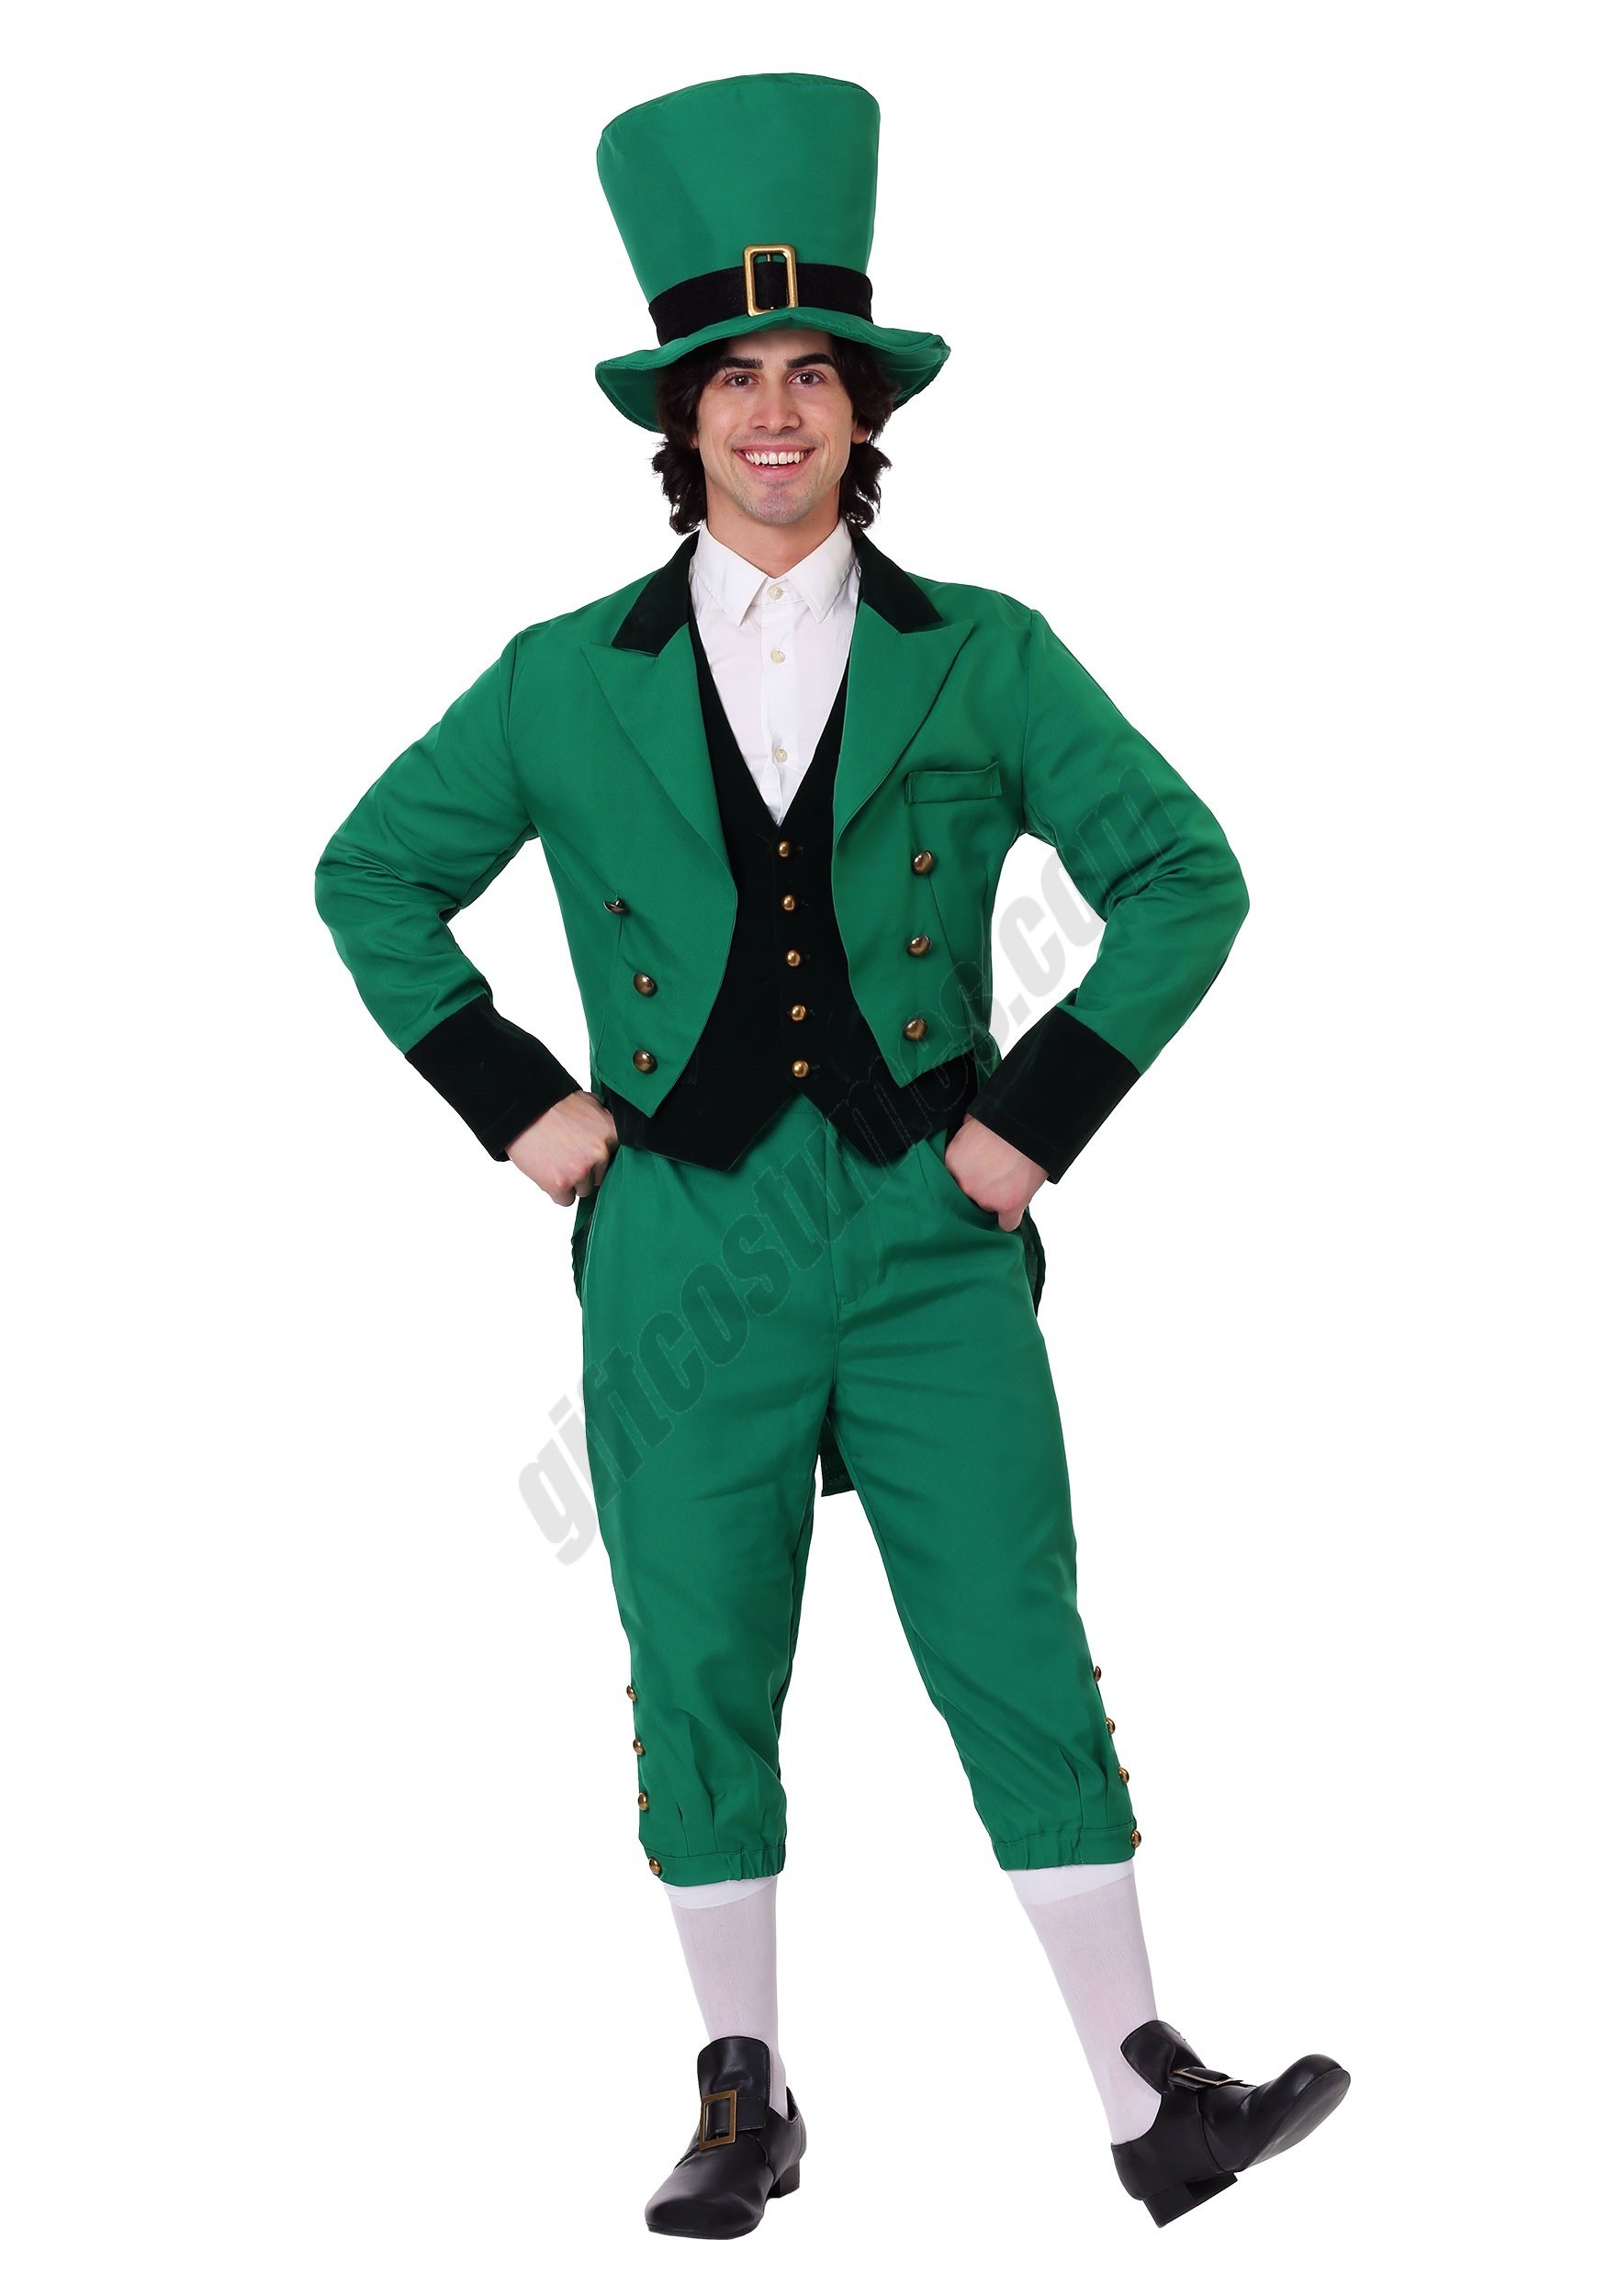 Plus Size Leprechaun Costume Promotions - Plus Size Leprechaun Costume Promotions